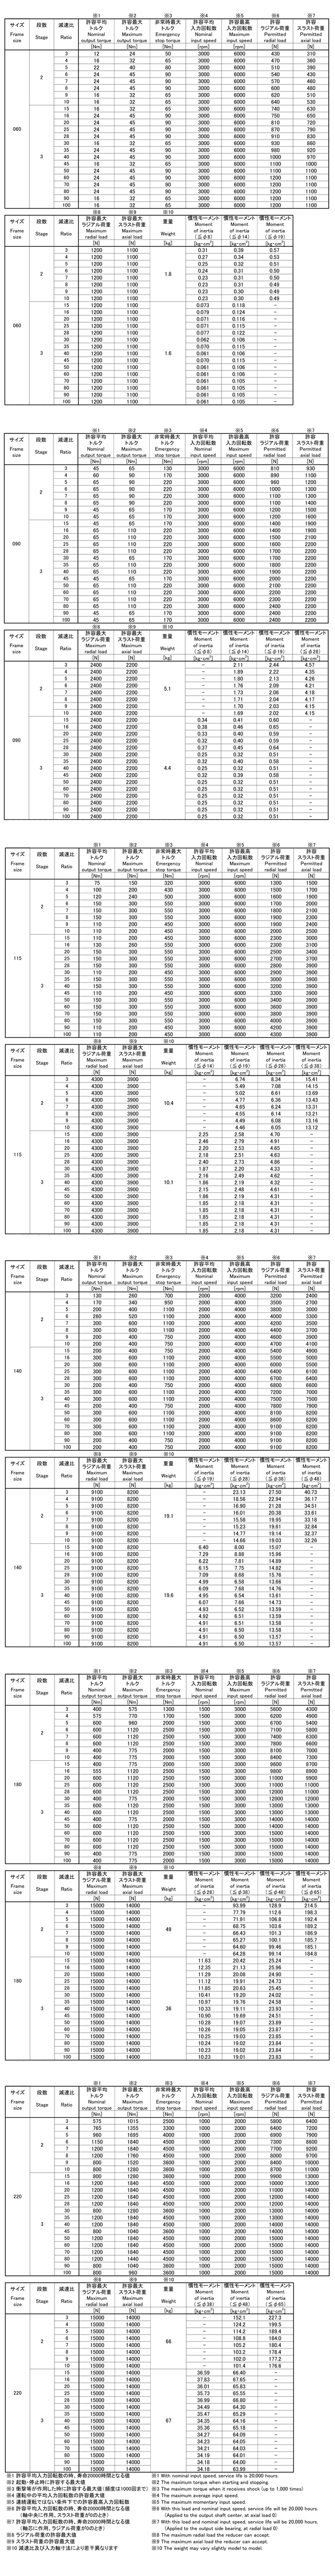 日本shimpo减速机EVB系列规格列表